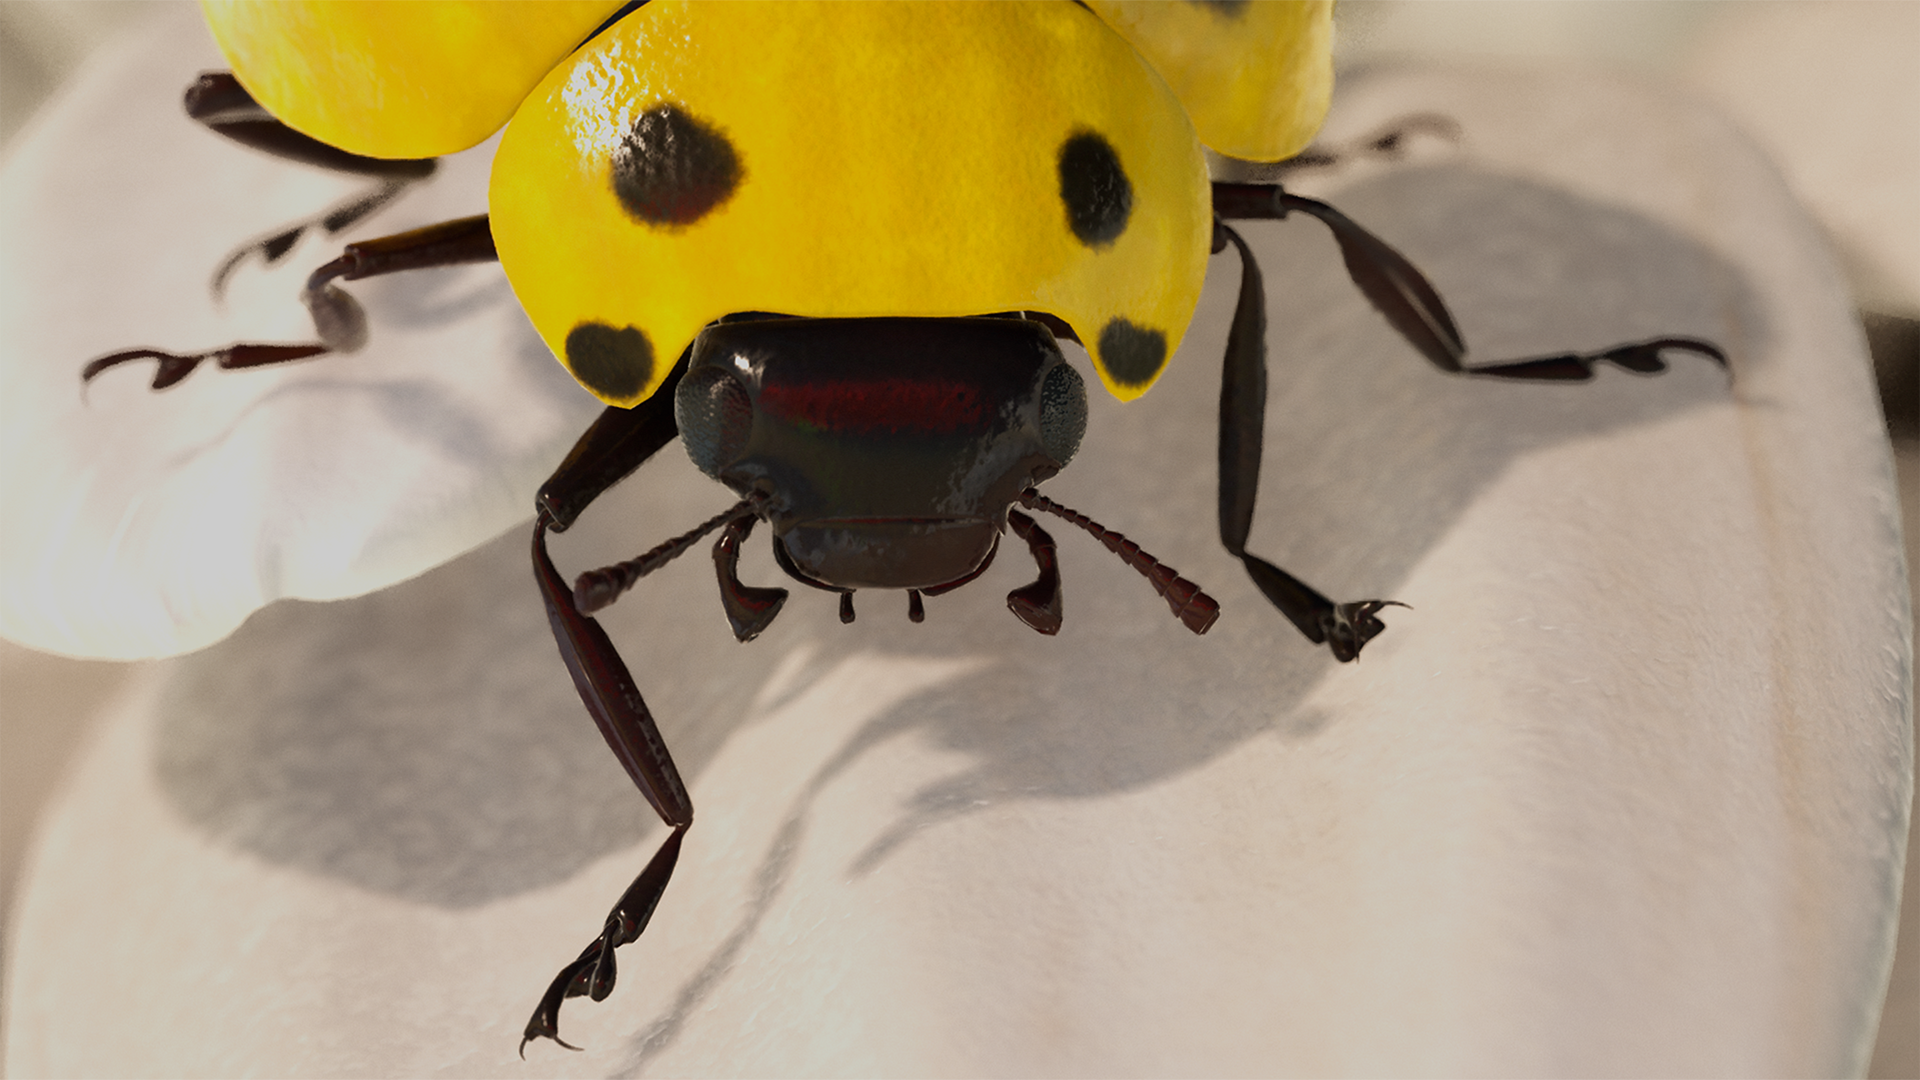 scorpio-ladybug-zoomed.png